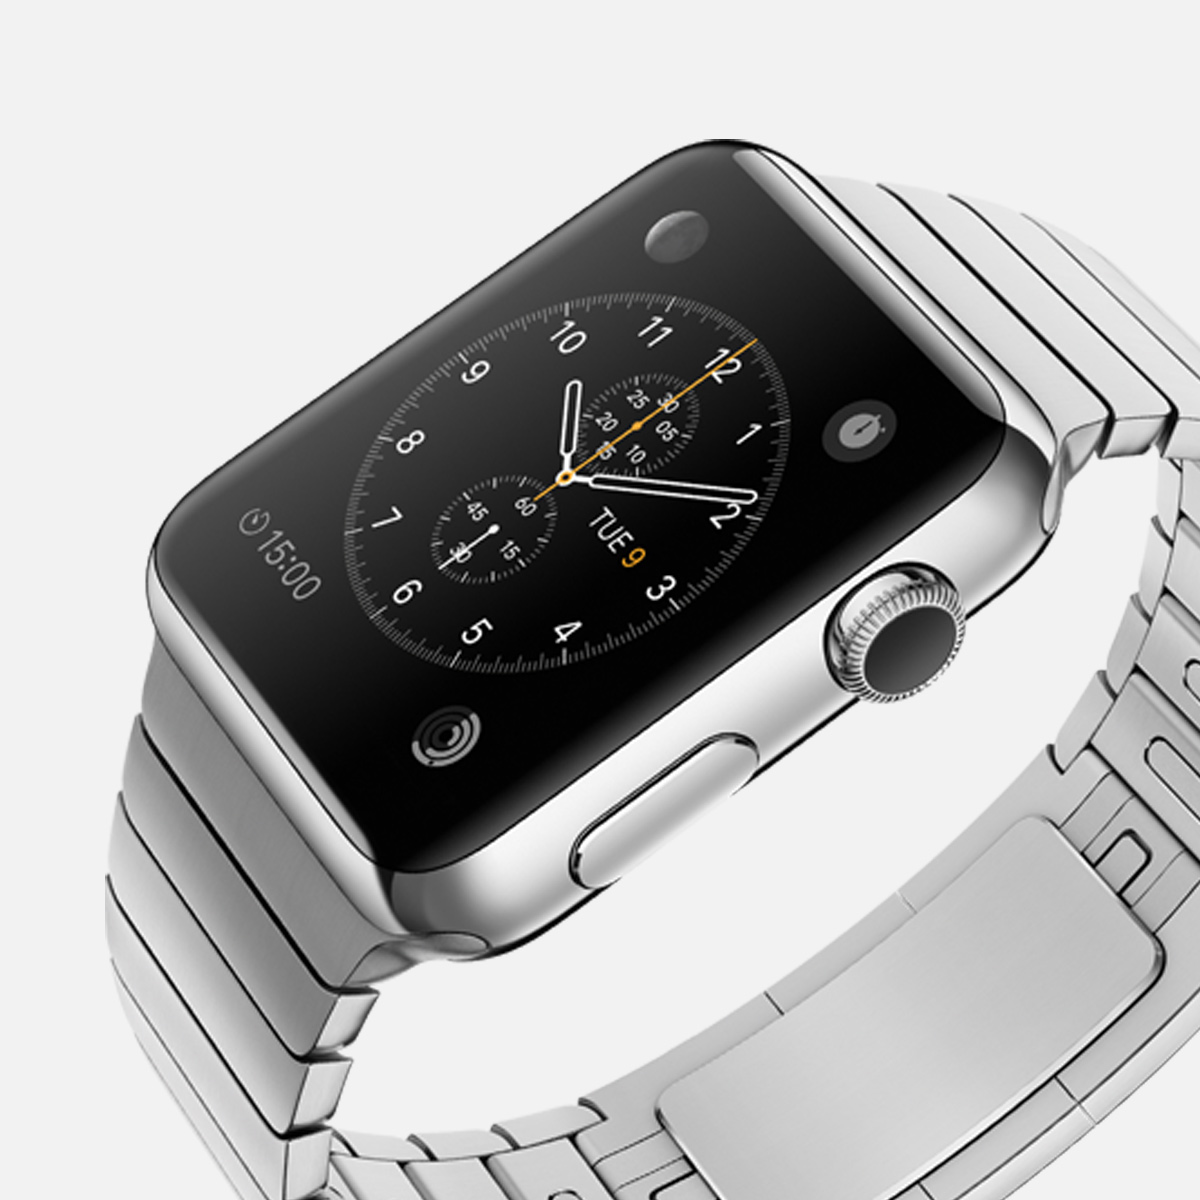  Apple Watch The Smart Luxury Watches InspirationSeek